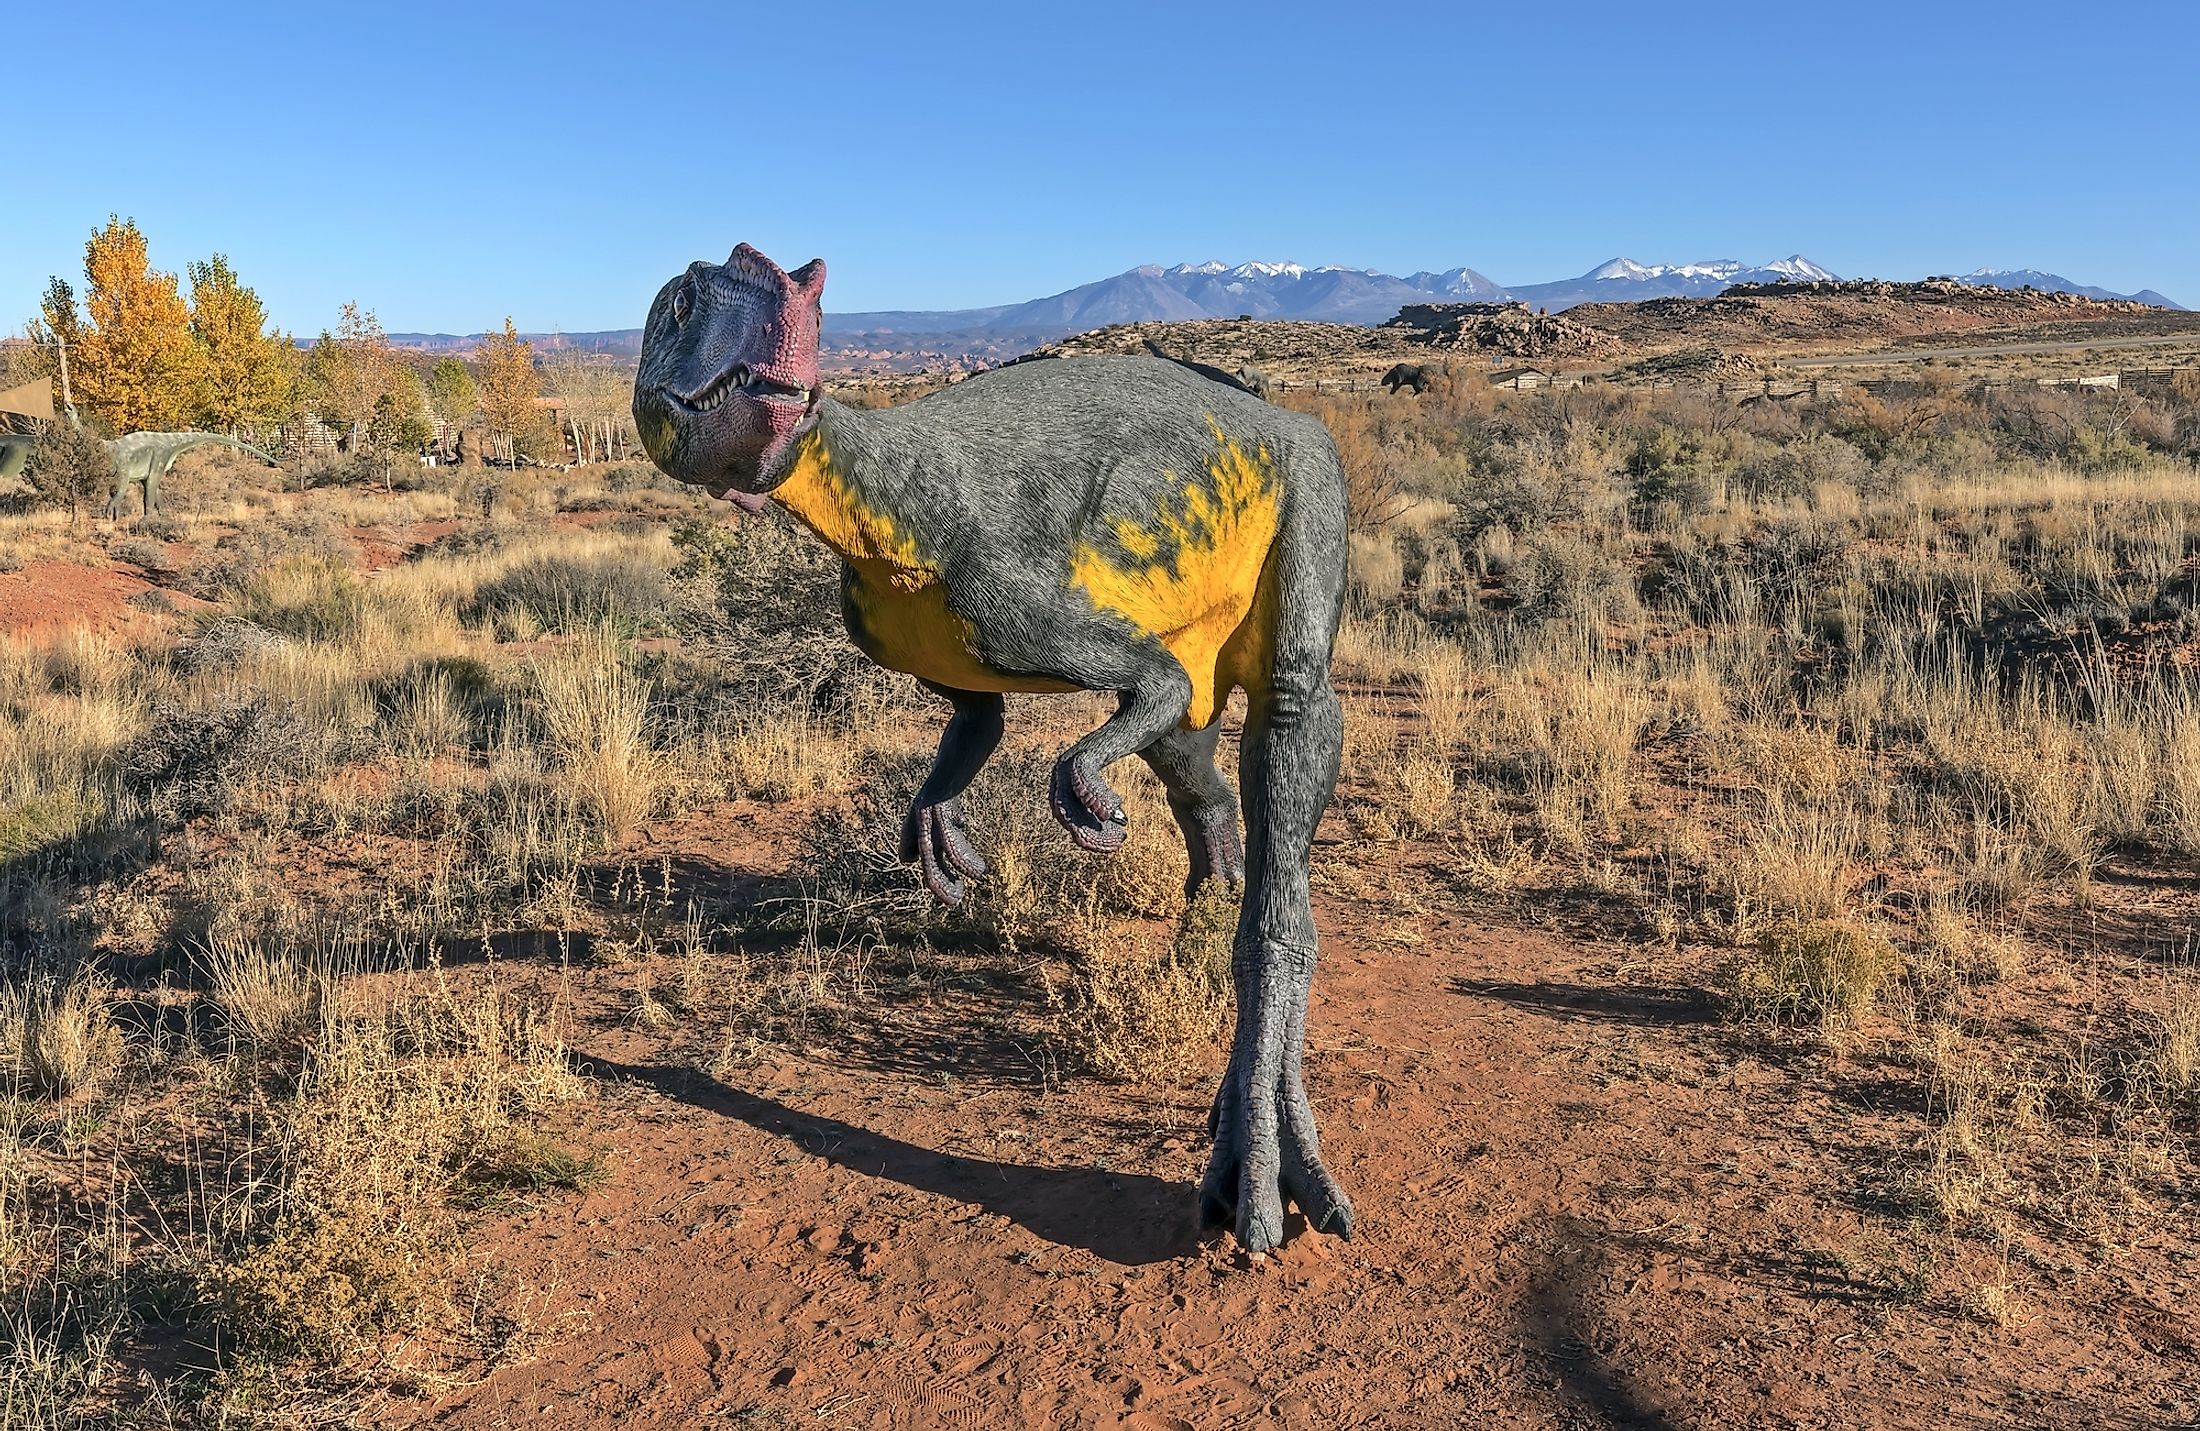 Dinosaur. Editorial credit: Geofox / Shutterstock.co